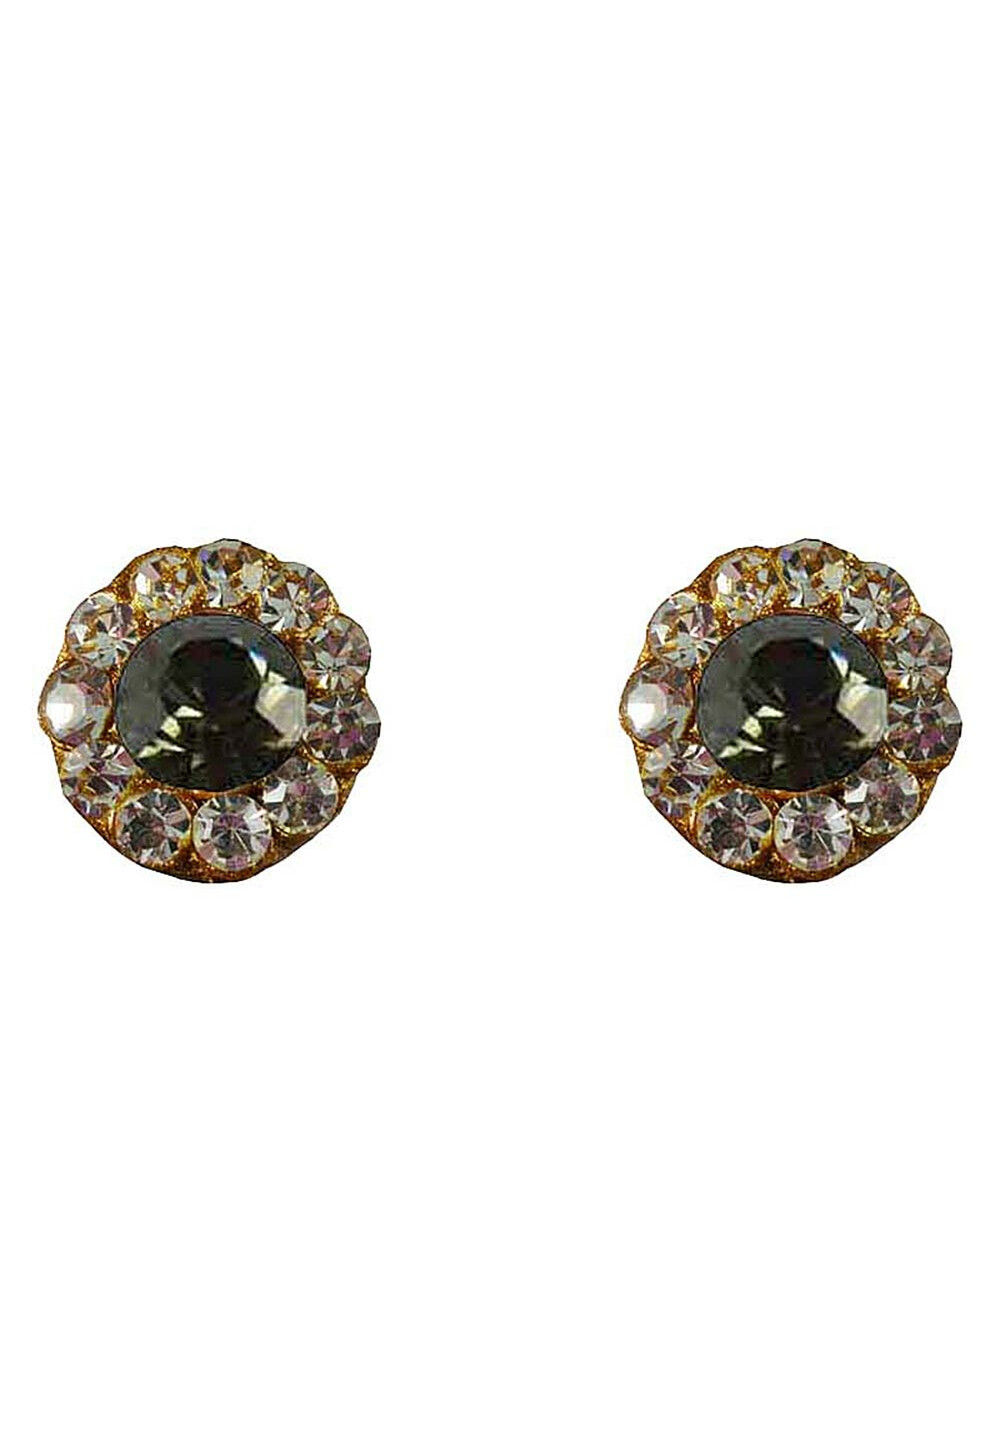 Buy Black  Grey StoneStudded Contemporary Drop Earrings online   Looksgudin